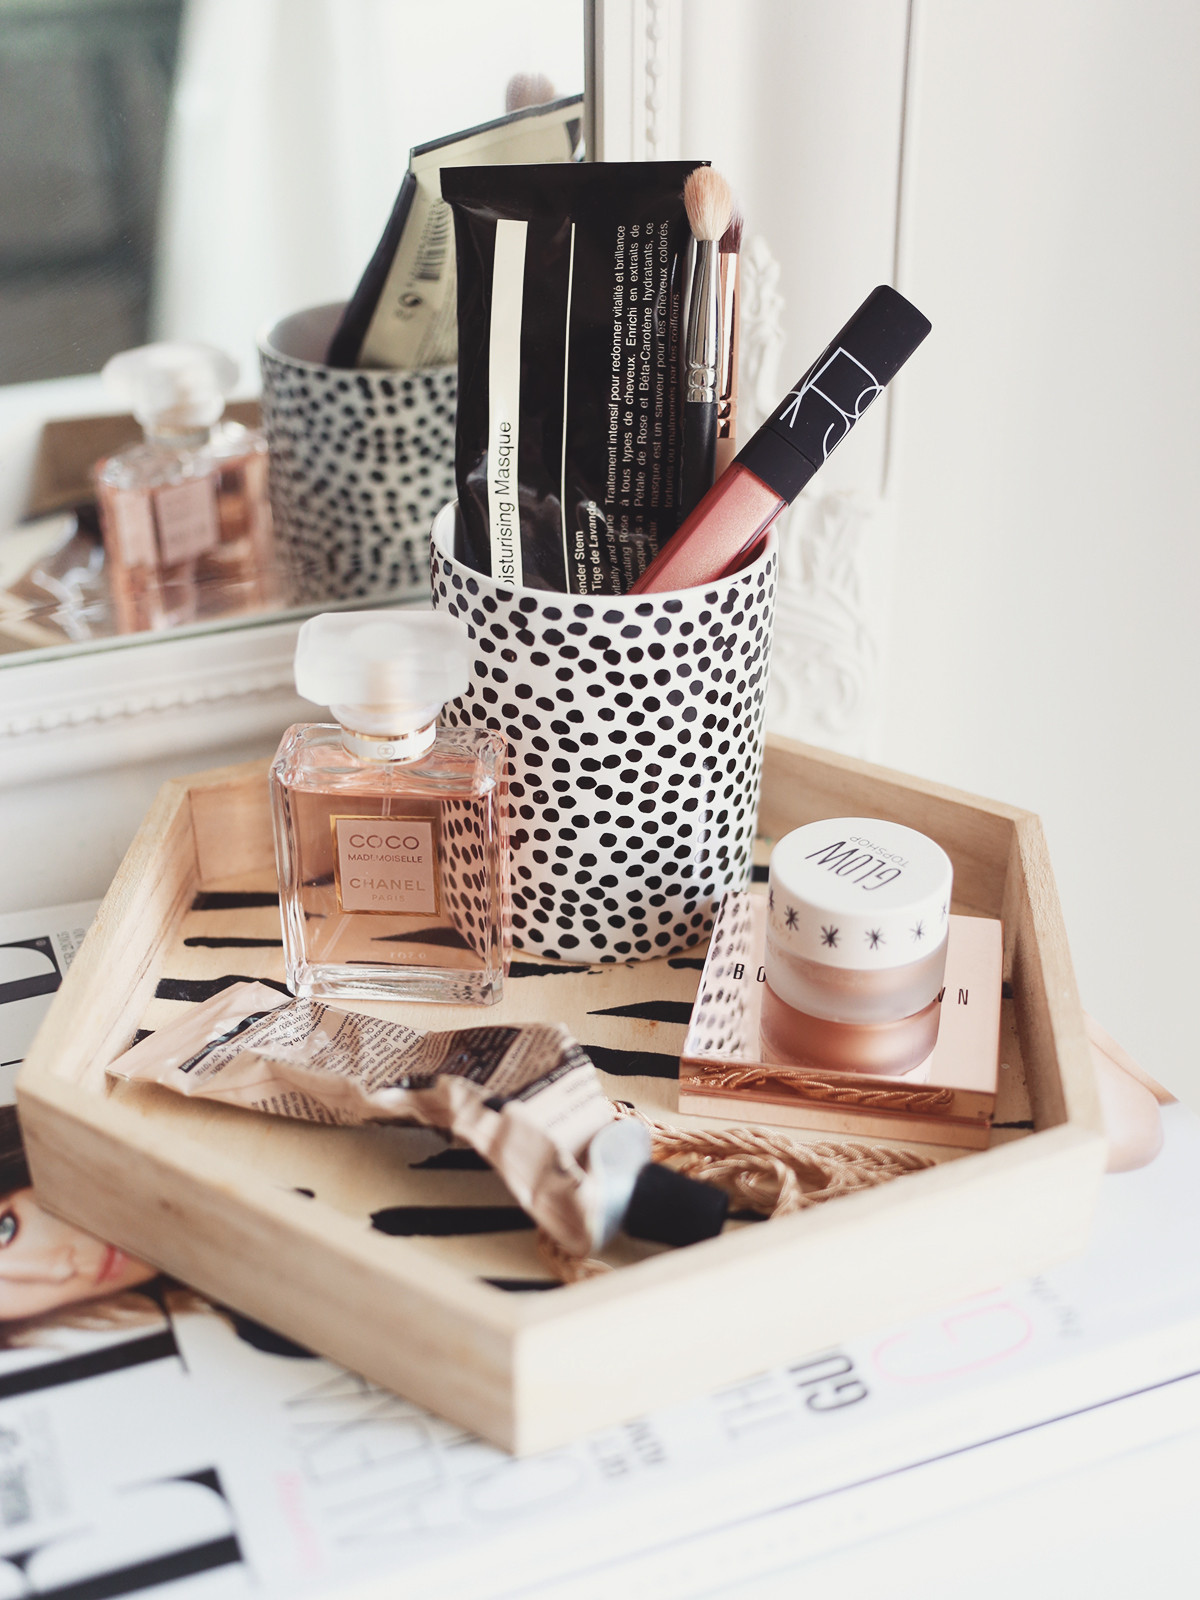 How To Organize Makeup DIY
 10 Easy DIY Makeup Organizer Ideas You’ll Want to Copy